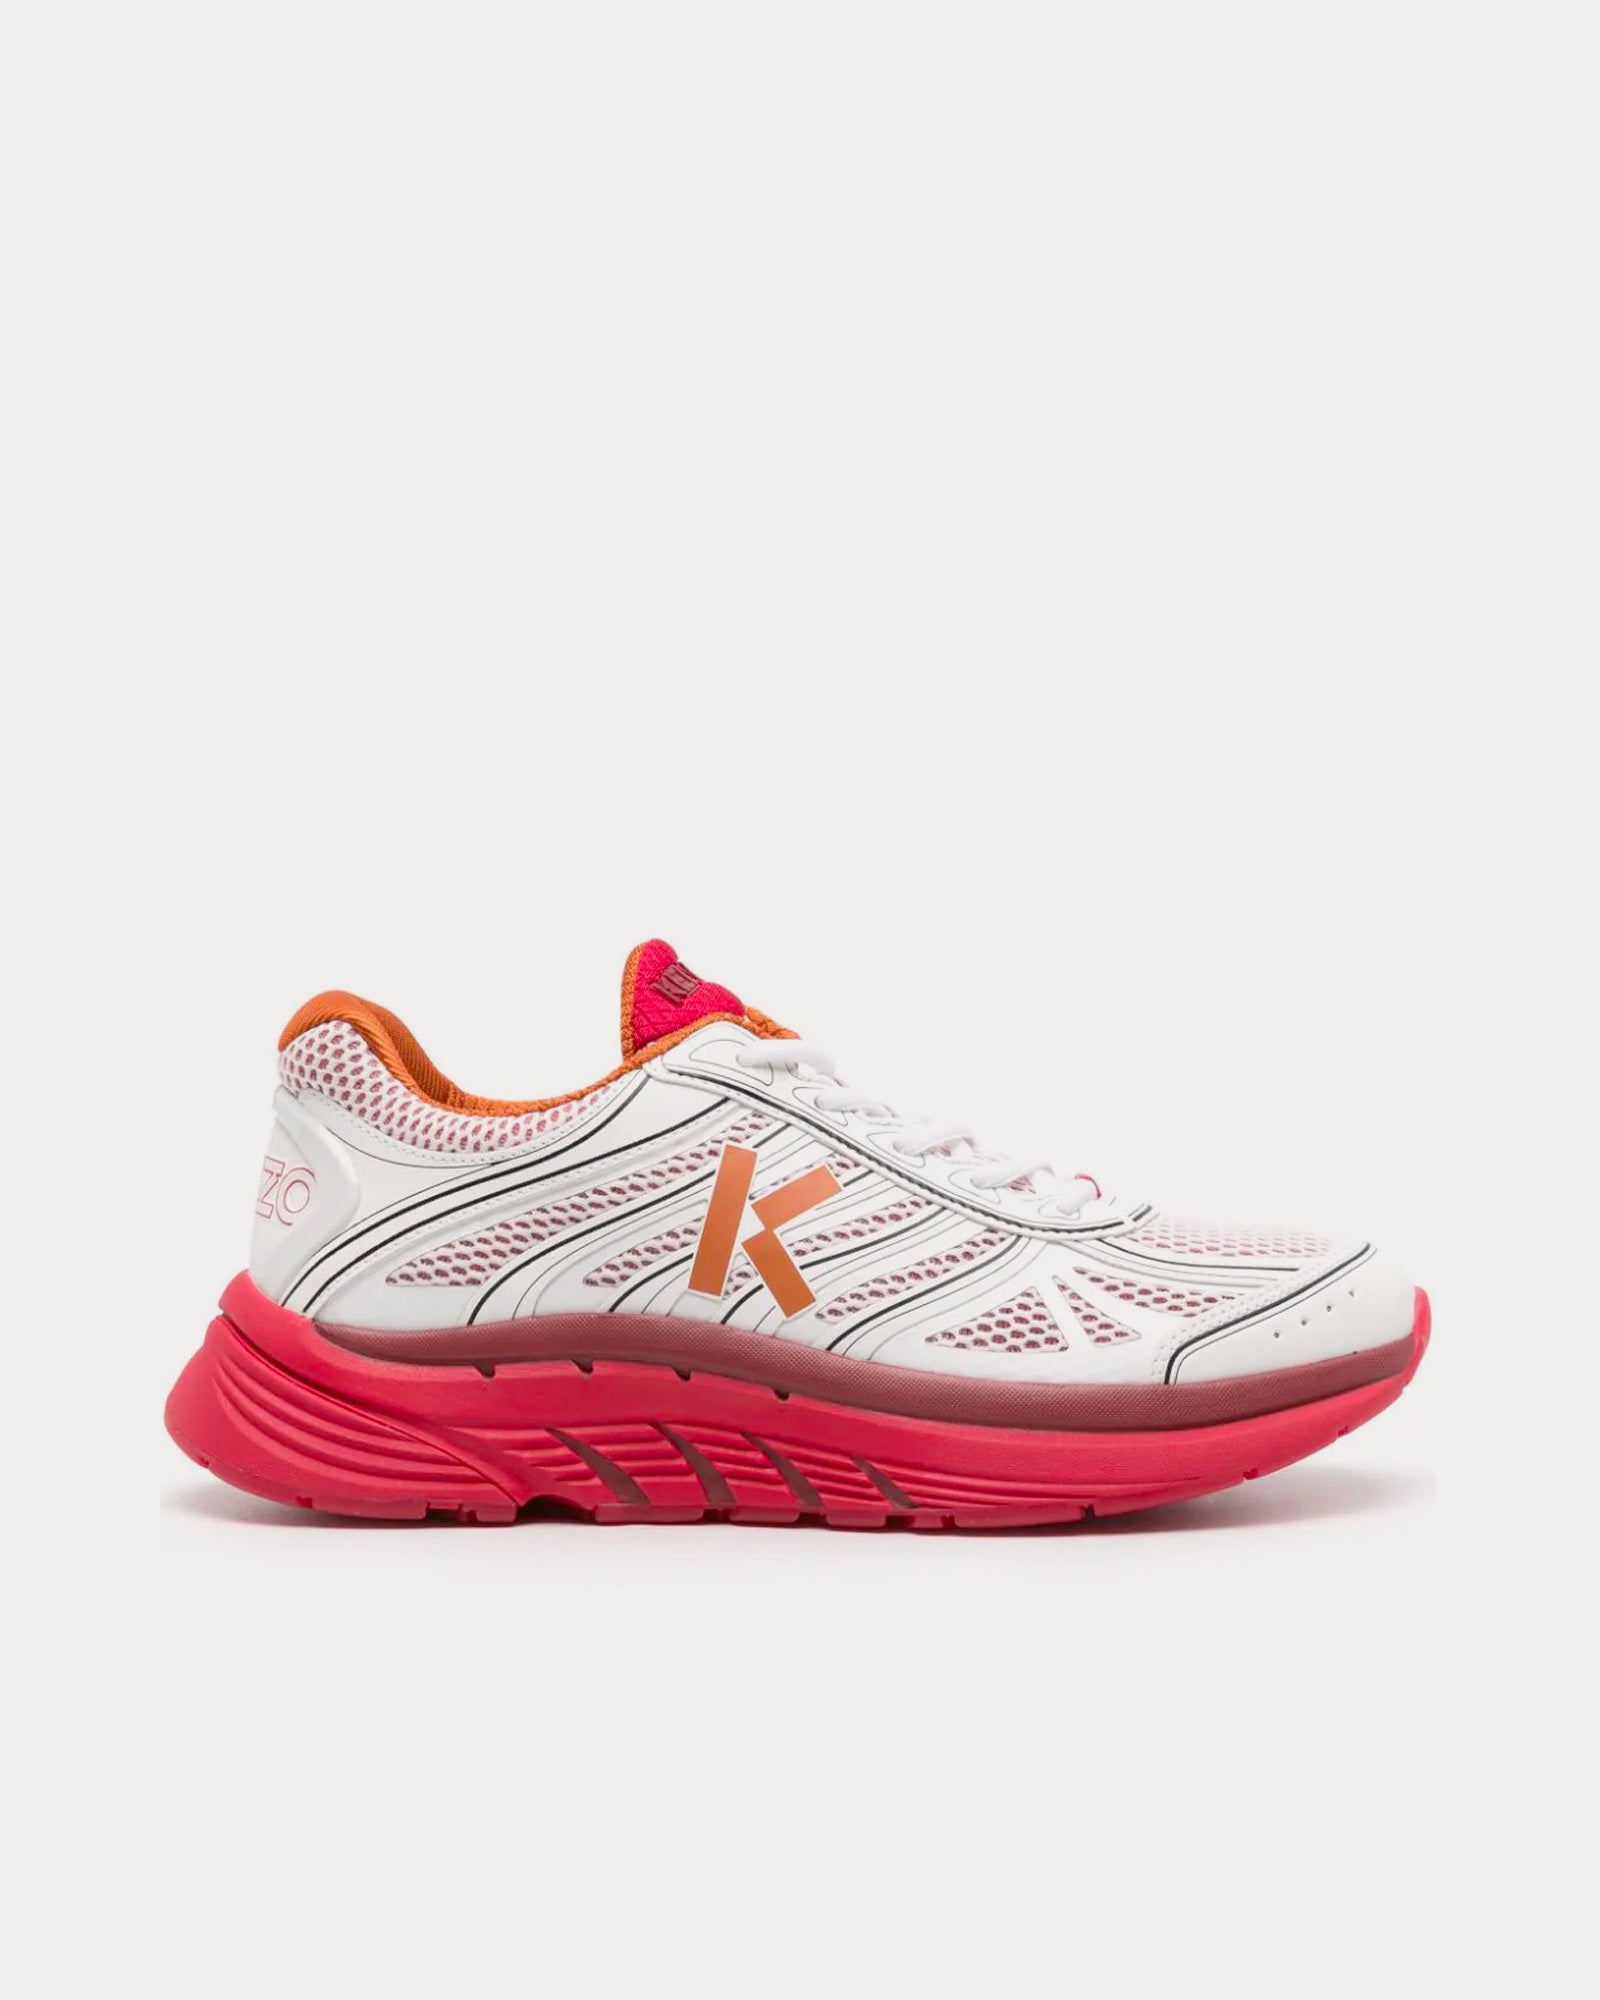 Kenzo - Pace Tech Runner Medium Red Low Top Sneakers